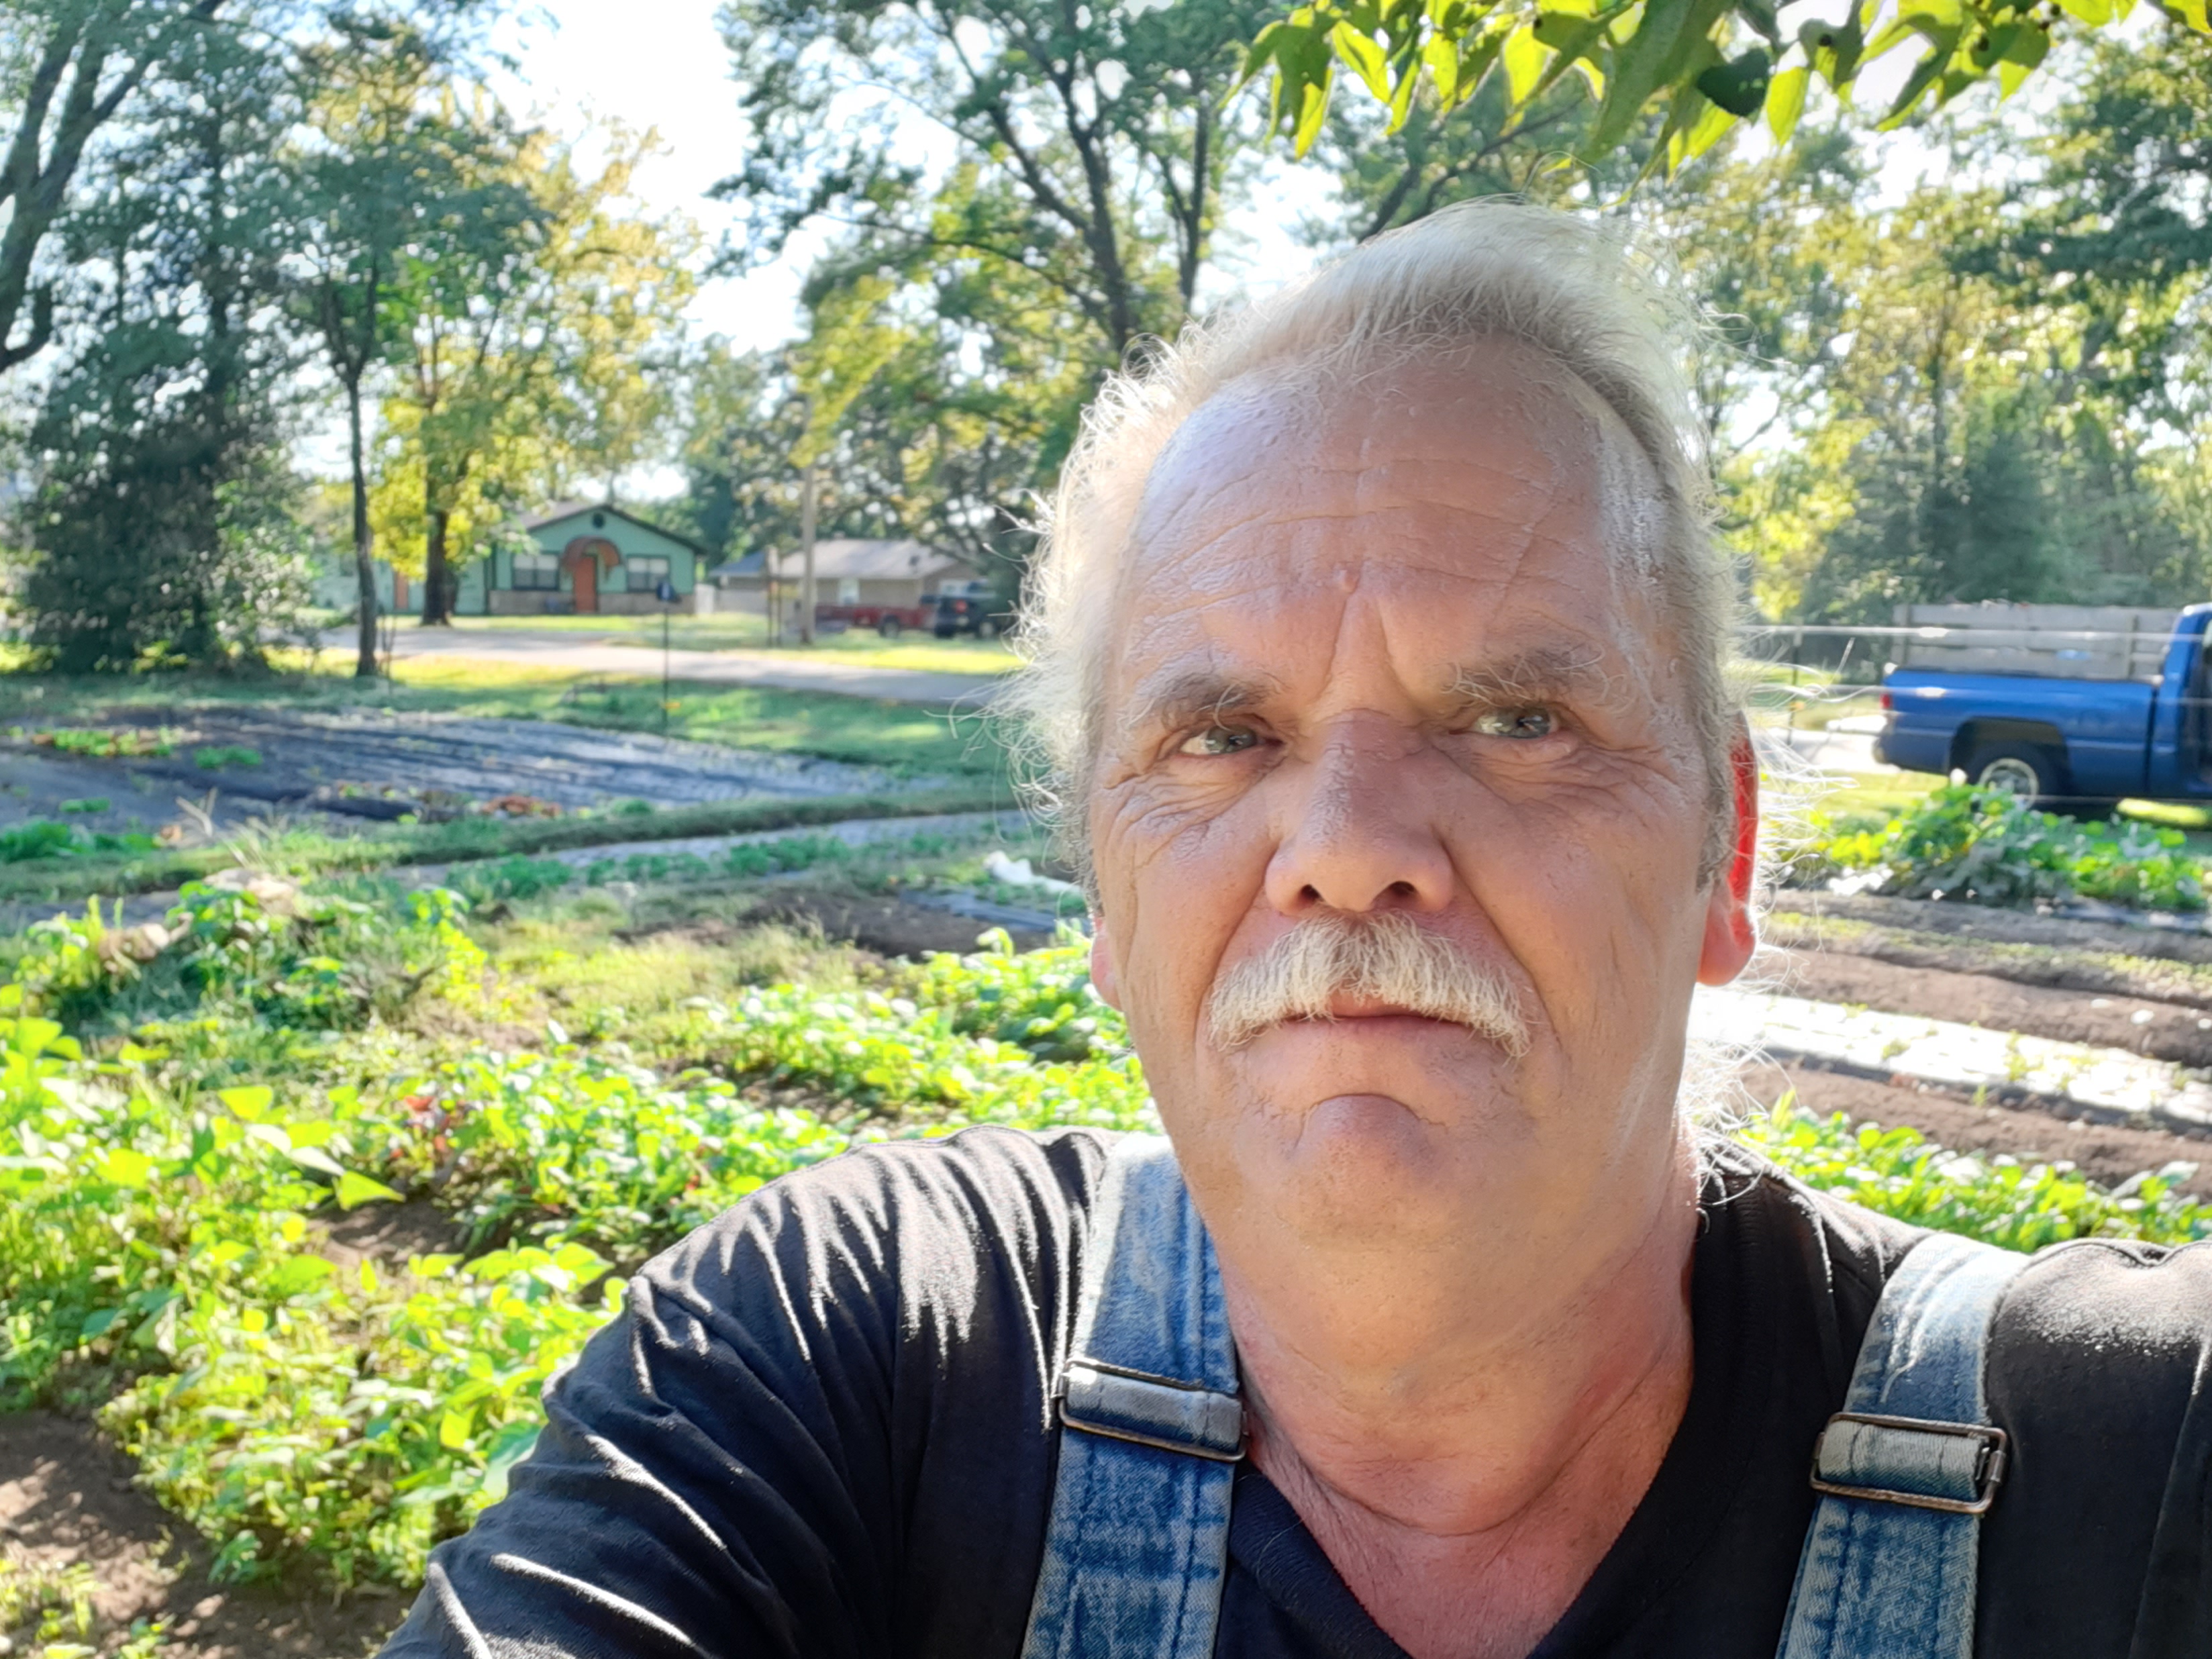 Terry Wisniewski | Northwest Arkansas Farmland Owner